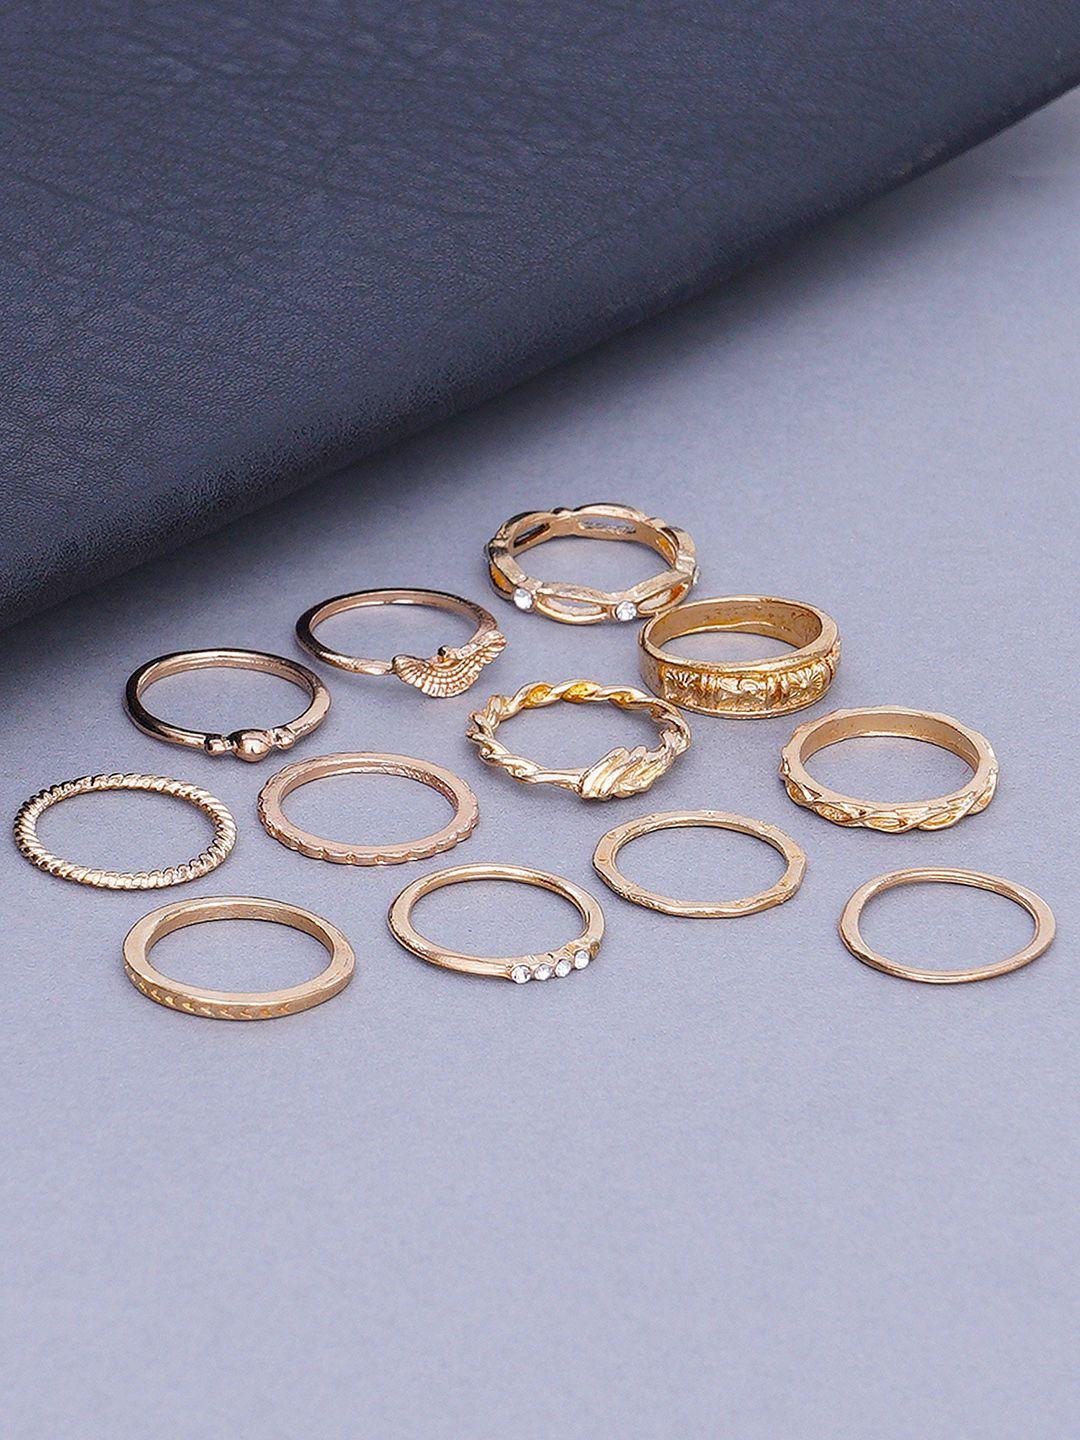 karatcart set of 12 gold-plated finger rings